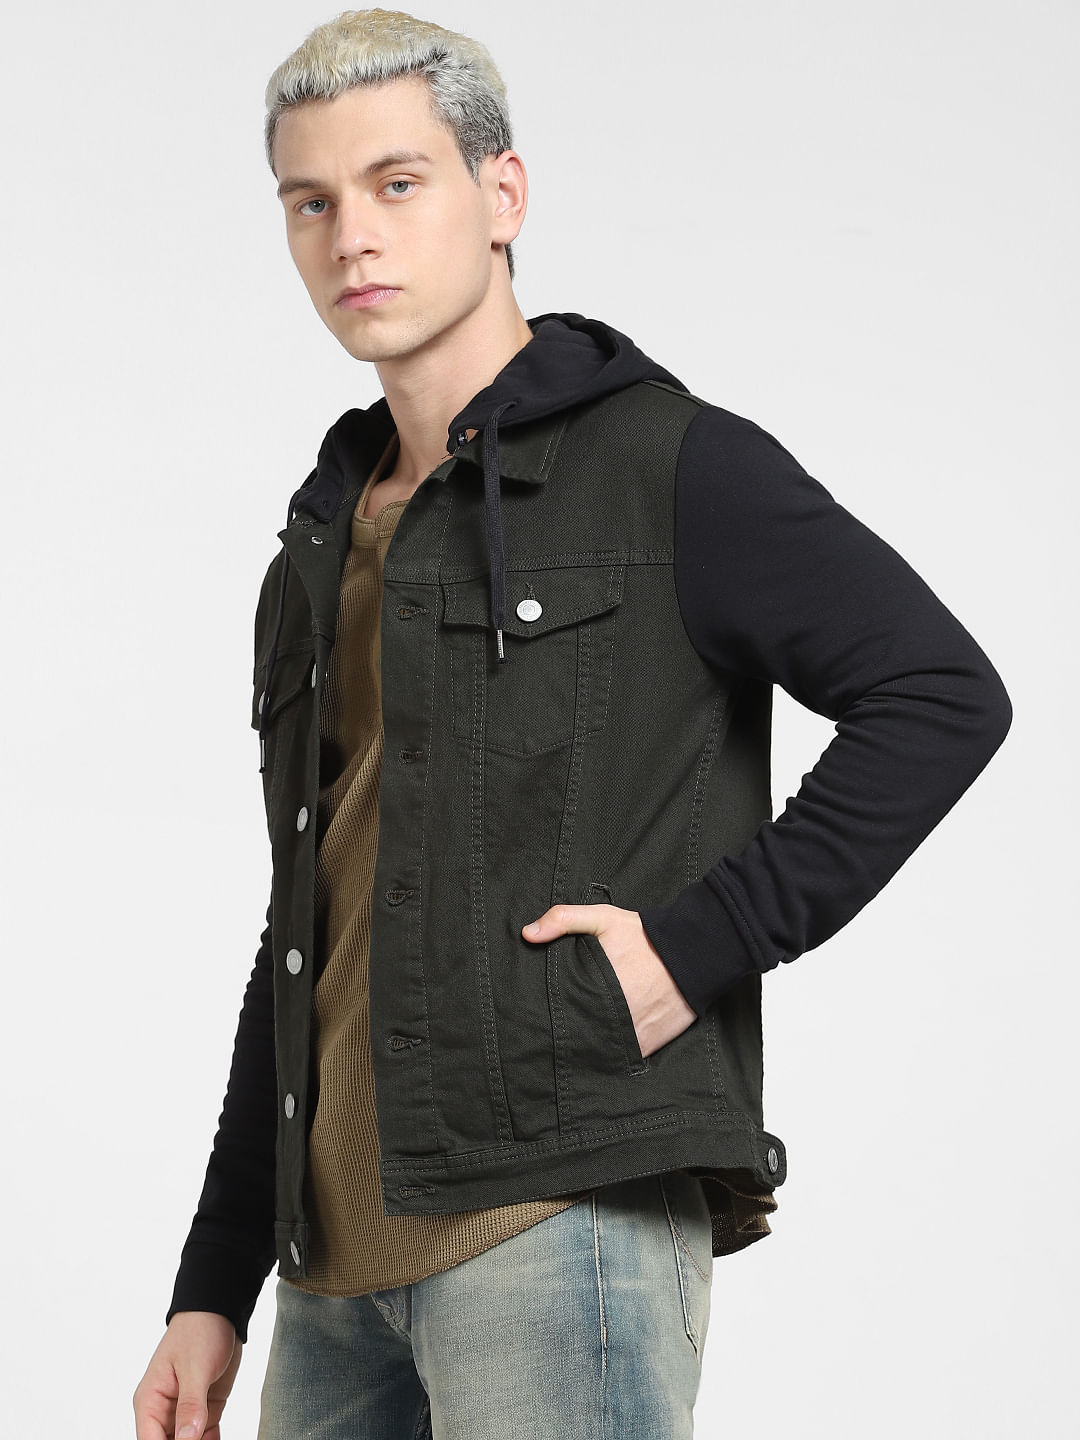 PullBear sleeveless denim jacket in black  ASOS